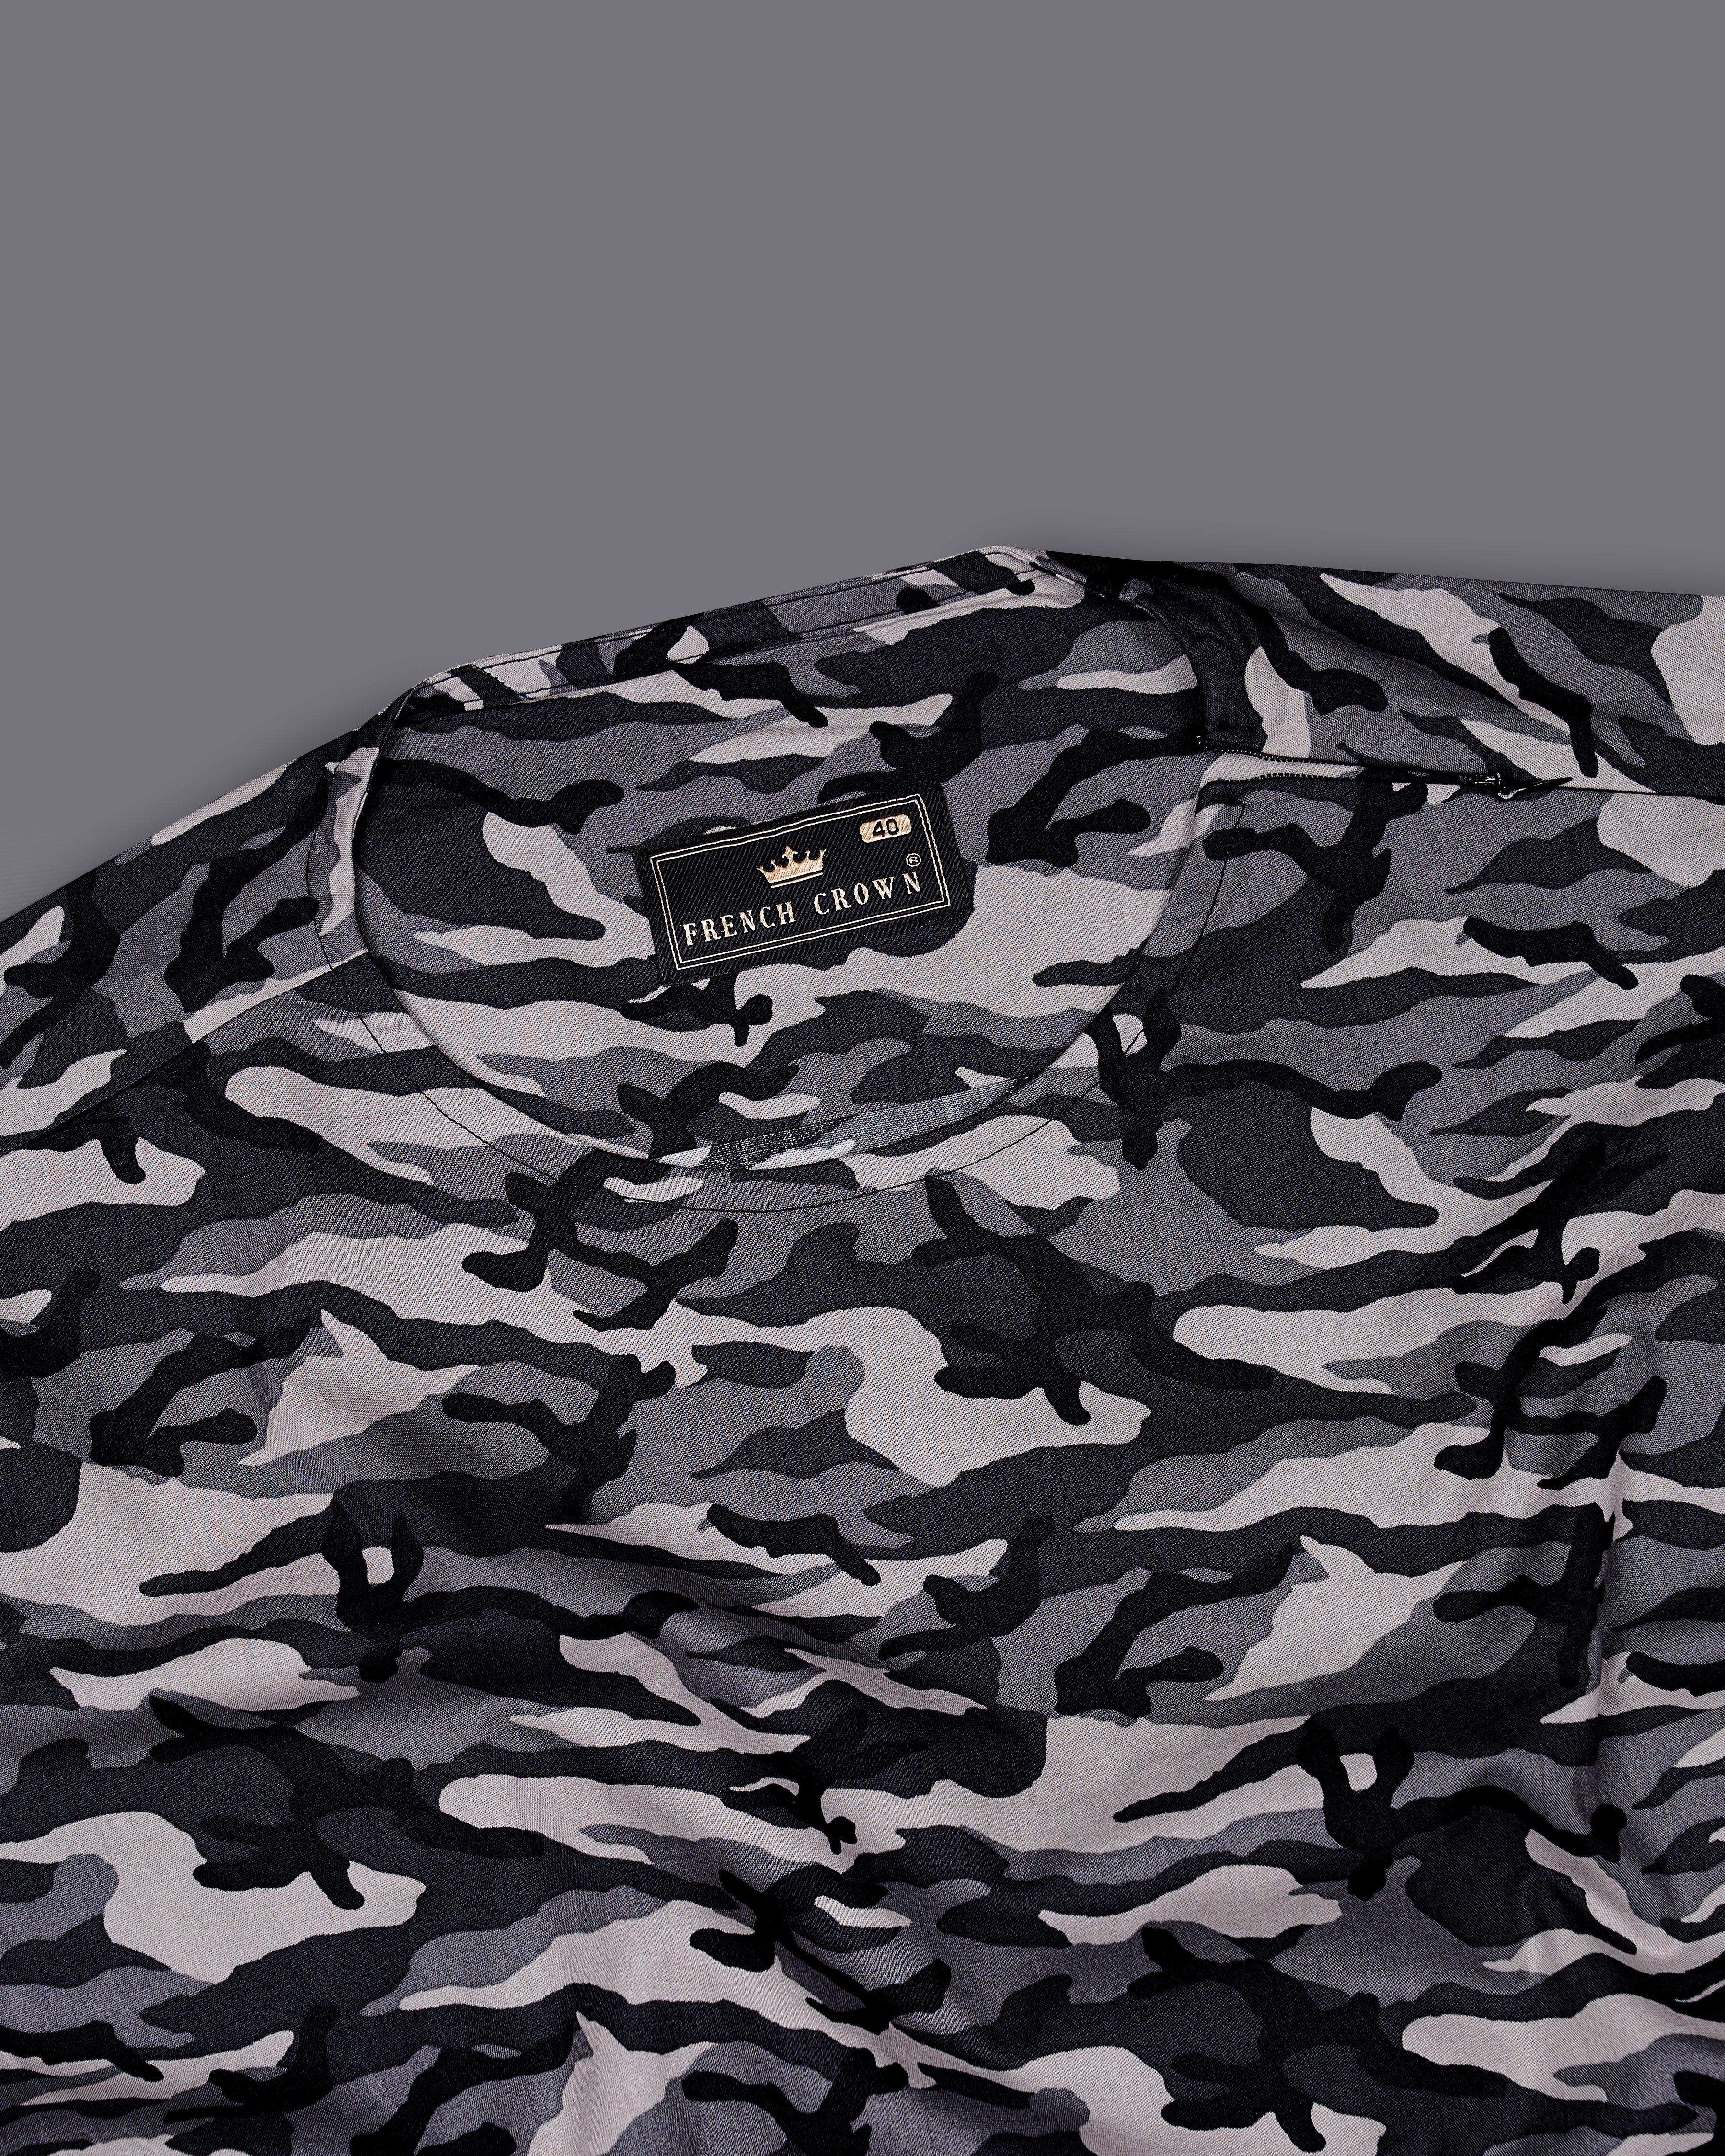 Half Camouflage Printed and Half-Black Royal Oxford Designer Bush Shirt 8912-WOC-P339-38, 8912-WOC-P339-H-38,  8912-WOC-P339-39,  8912-WOC-P339-H-39,  8912-WOC-P339-40,  8912-WOC-P339-H-40,  8912-WOC-P339-42,  8912-WOC-P339-H-42,  8912-WOC-P339-44,  8912-WOC-P339-H-44,  8912-WOC-P339-46,  8912-WOC-P339-H-46,  8912-WOC-P339-48,  8912-WOC-P339-H-48,  8912-WOC-P339-50,  8912-WOC-P339-H-50,  8912-WOC-P339-52,  8912-WOC-P339-H-52